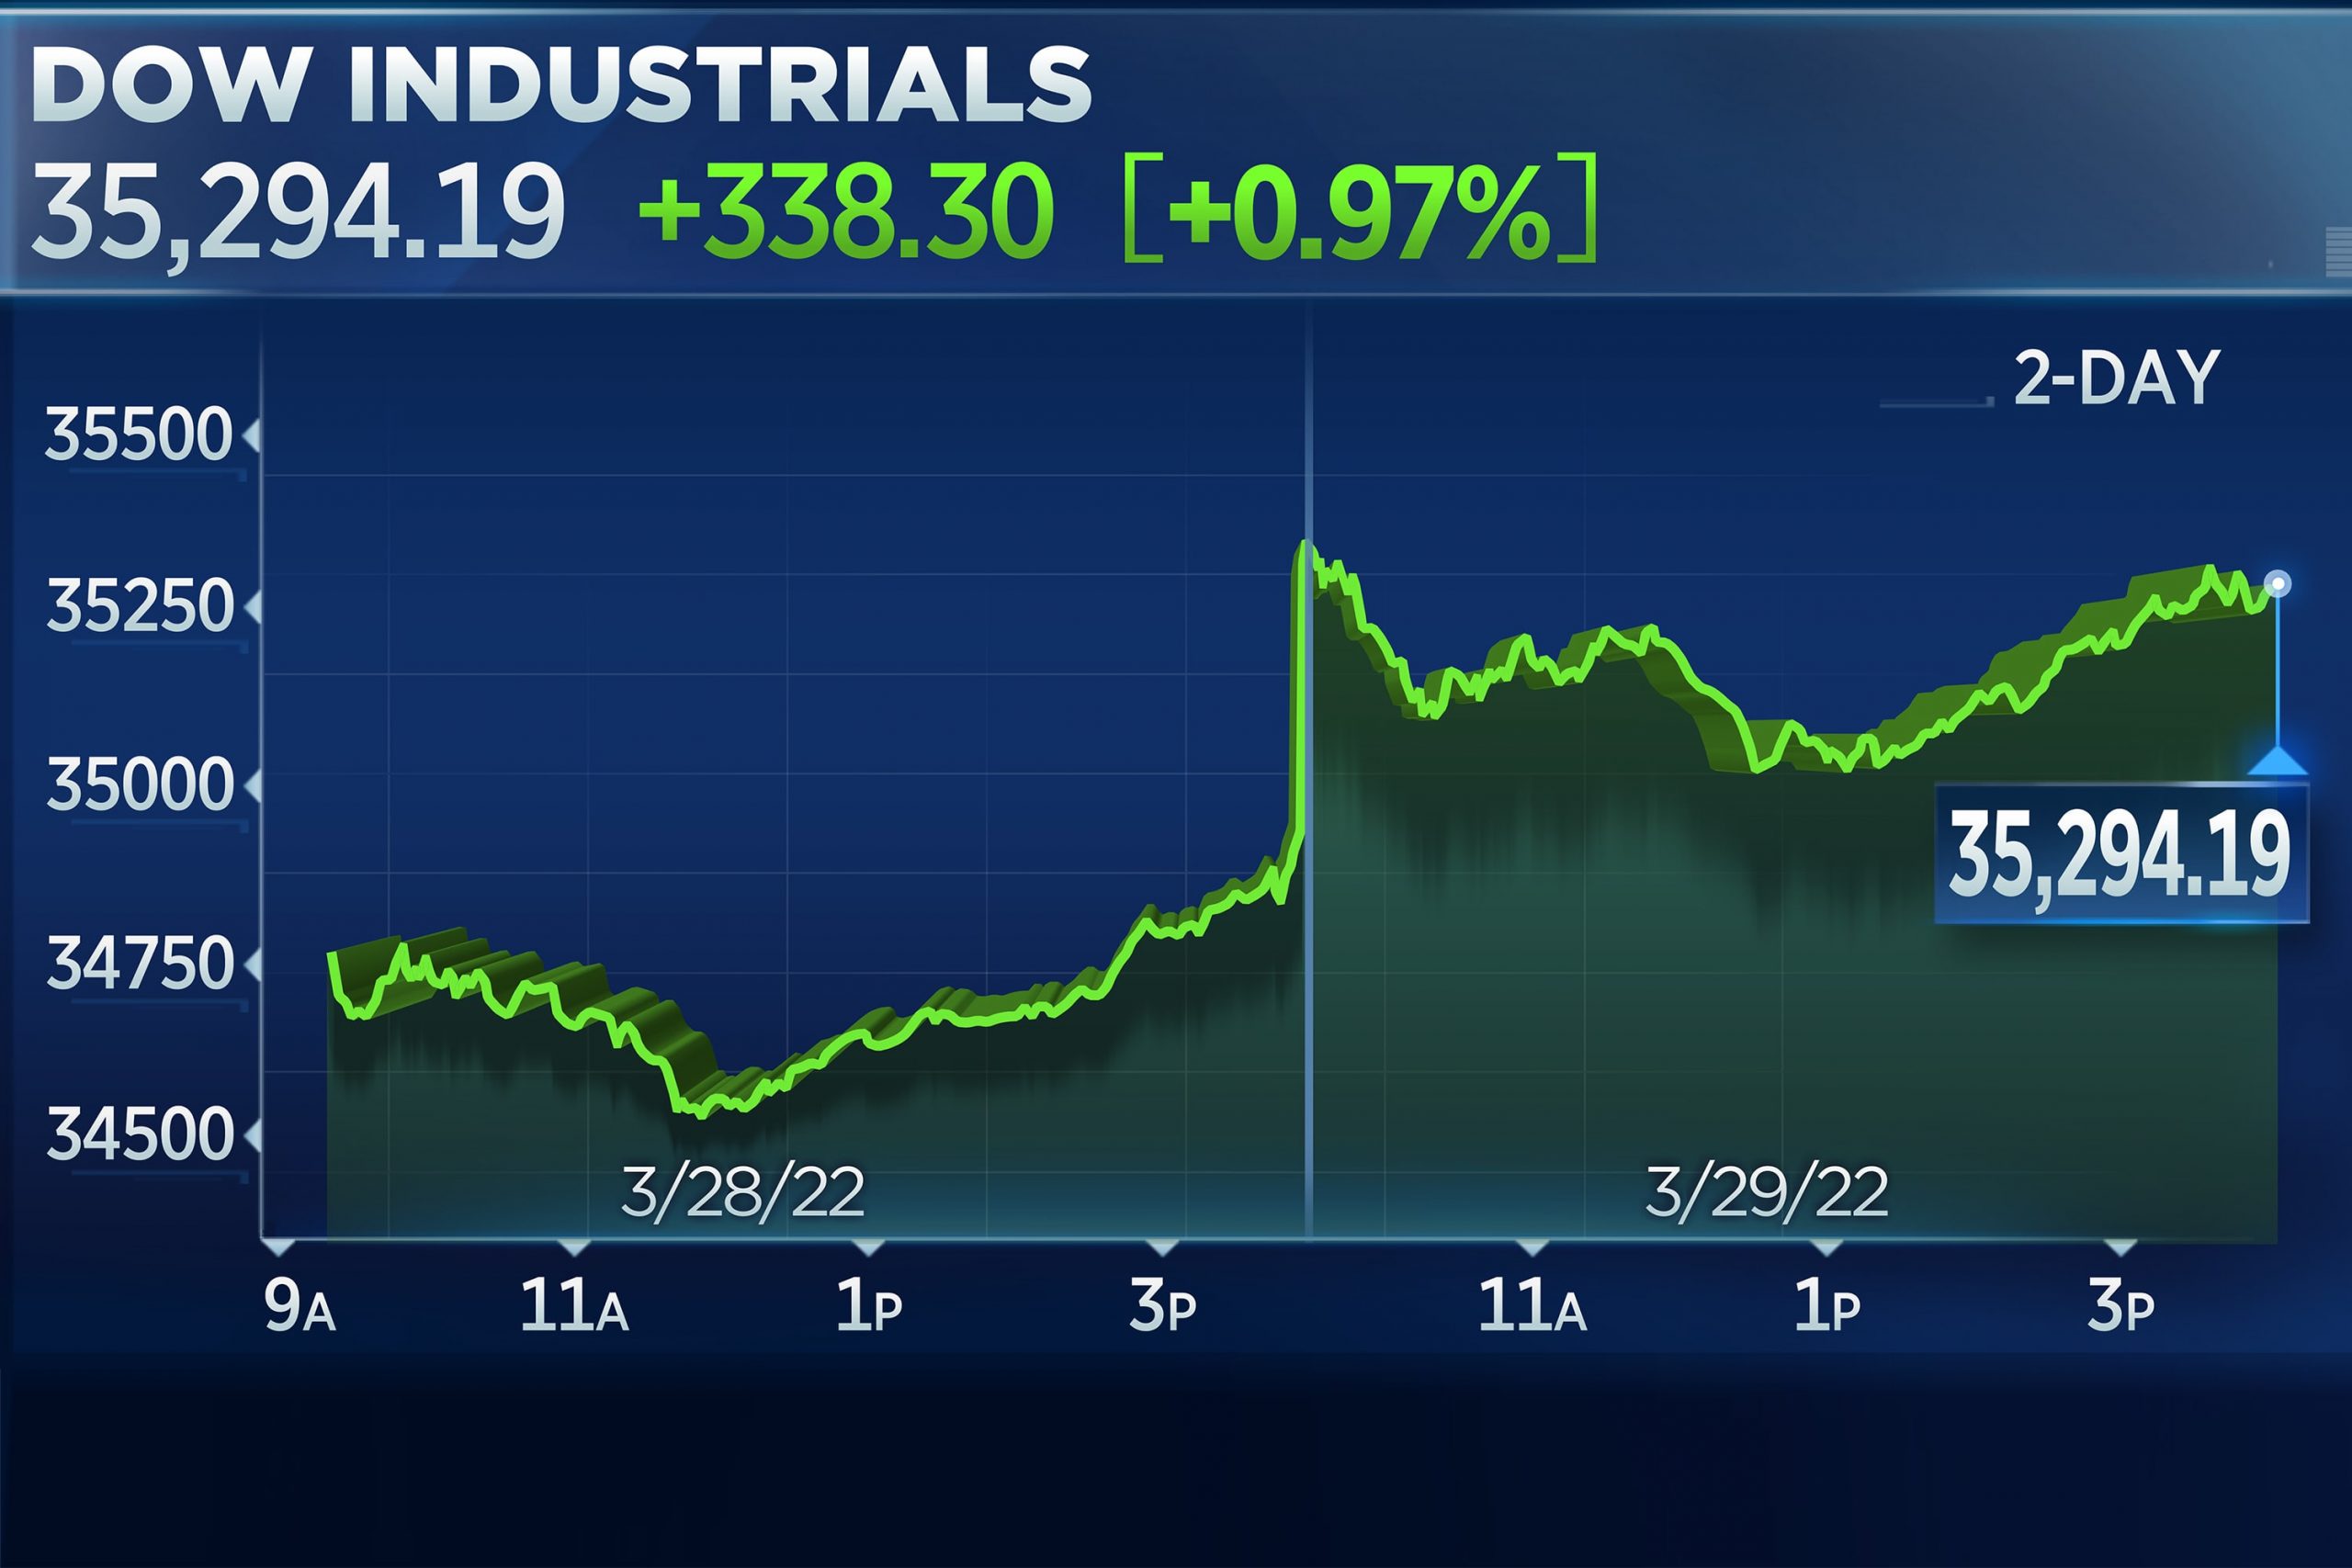 Dow rises more than 300 points, Nasdaq jumps 1.8% as Wall Street builds on winning streak